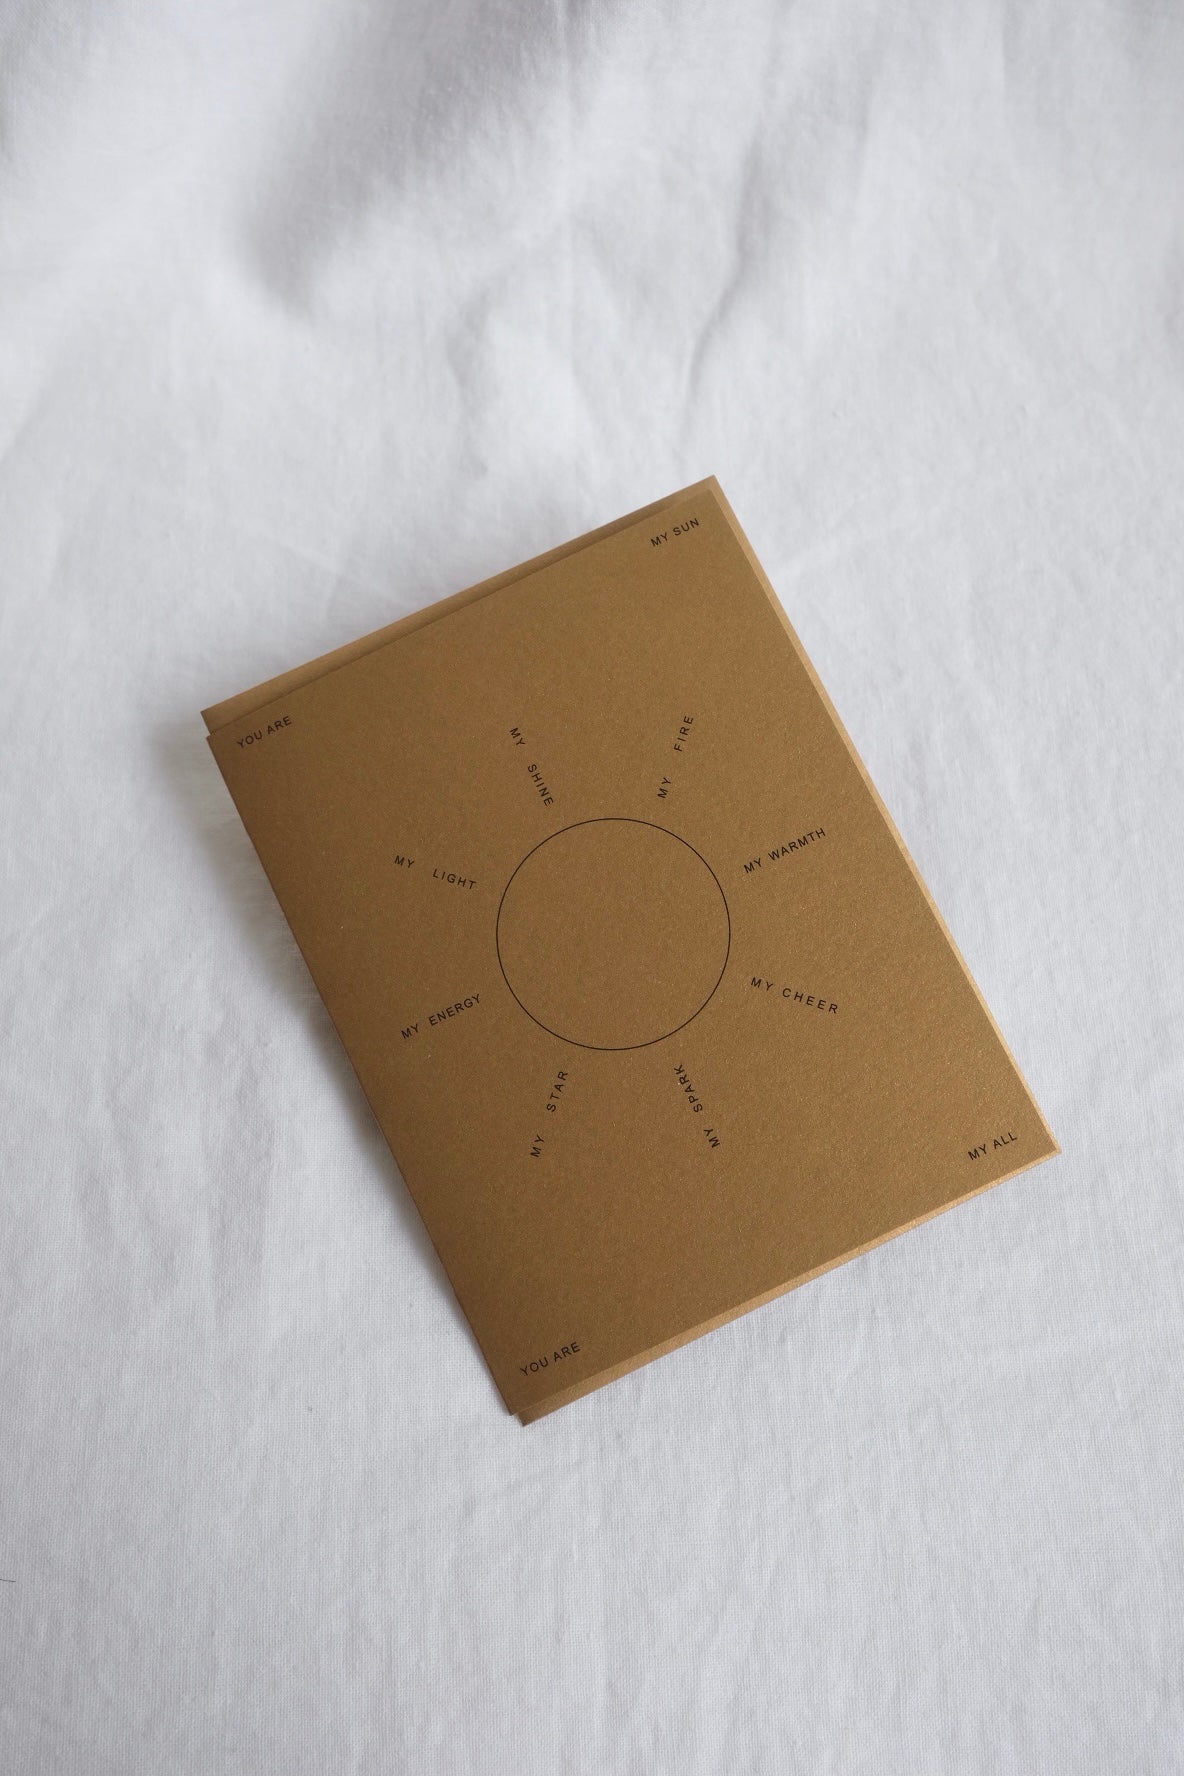 celestial card: sun